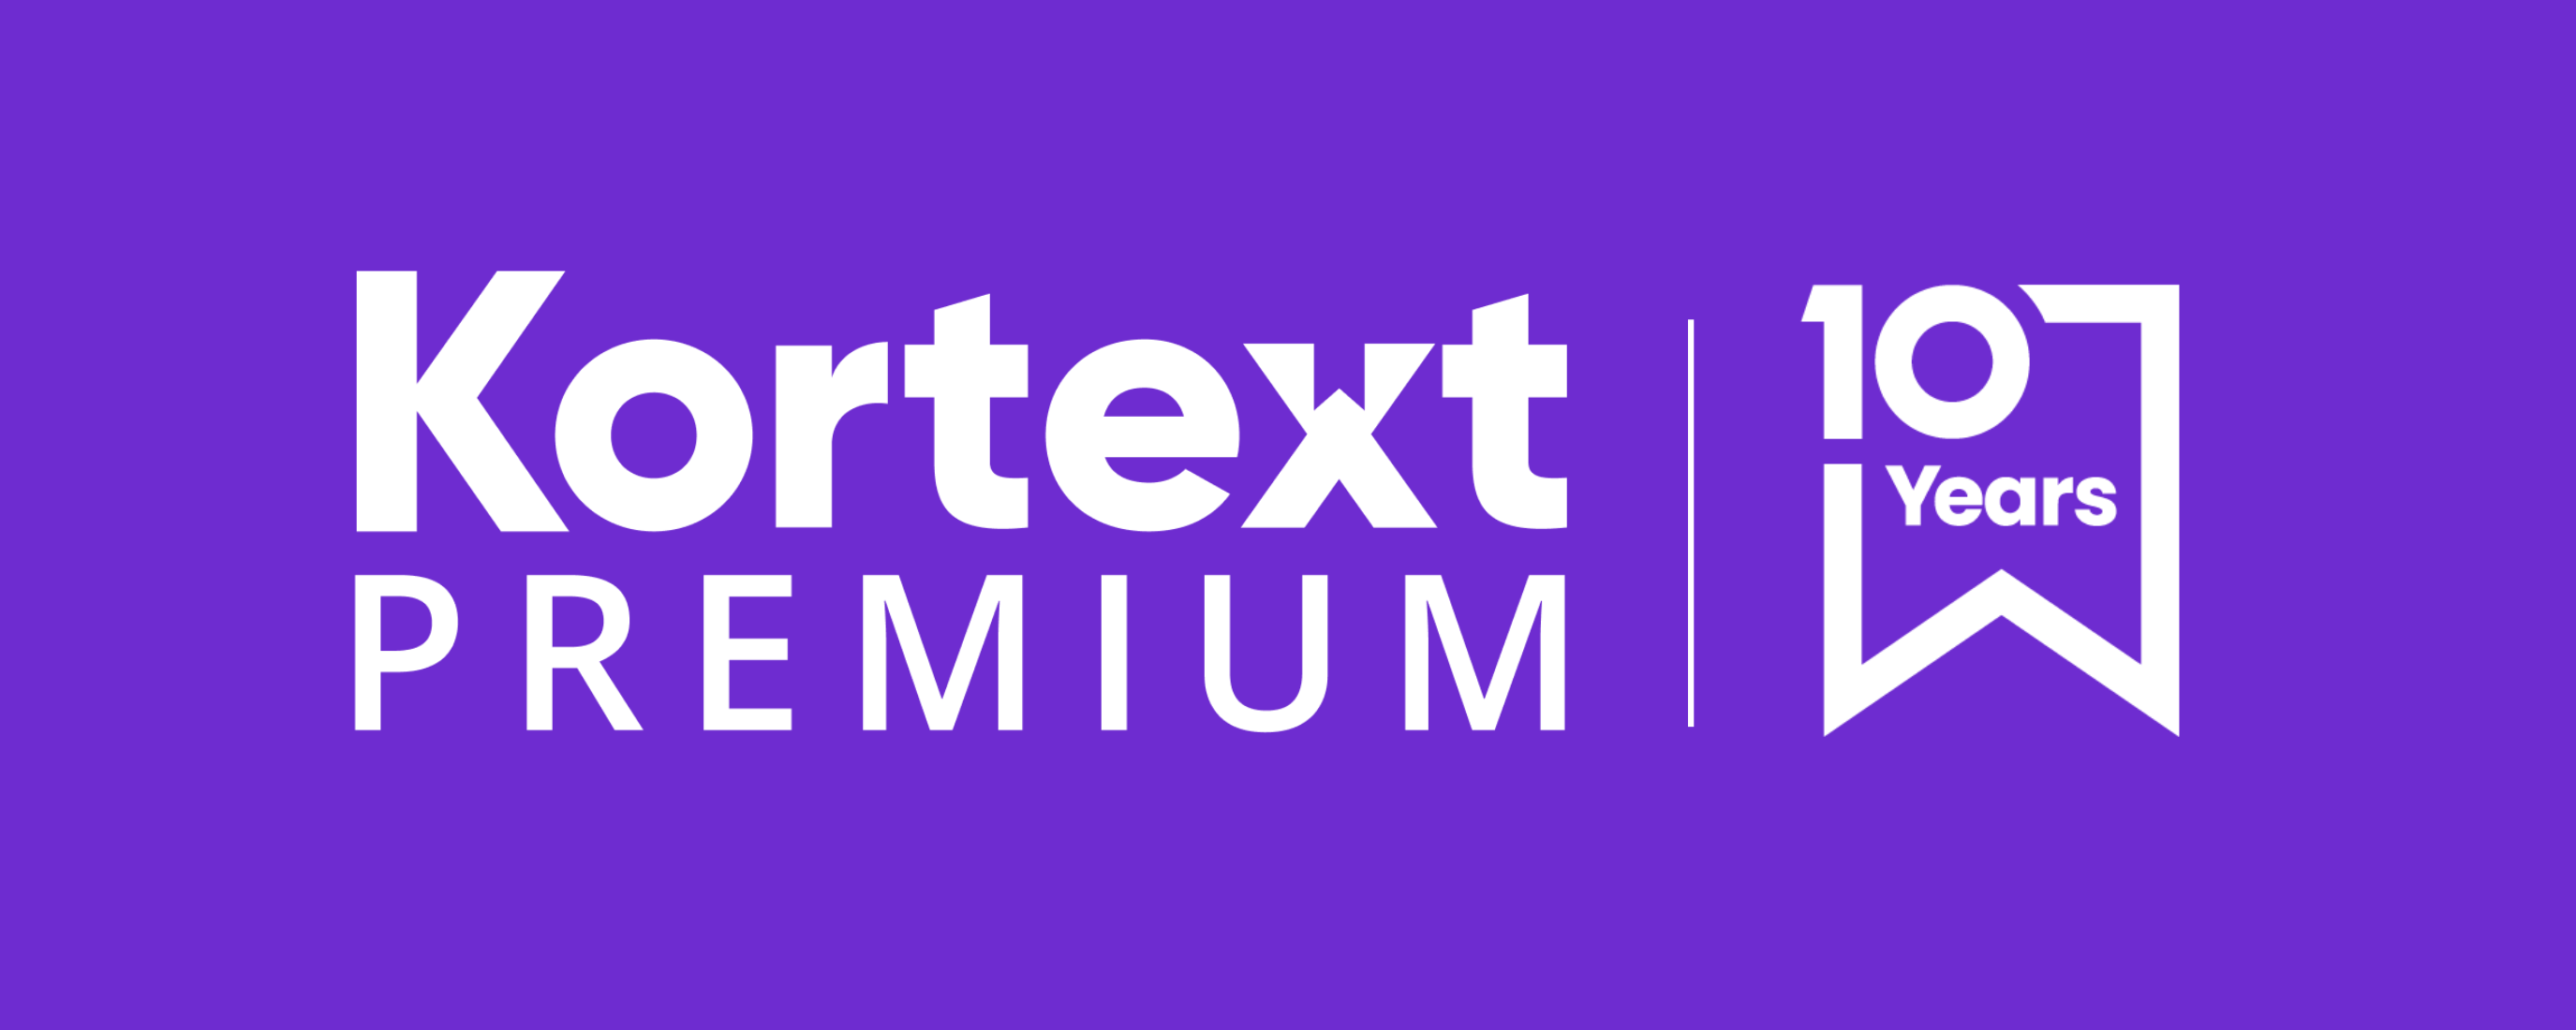 Kortext PREMIUM master logo